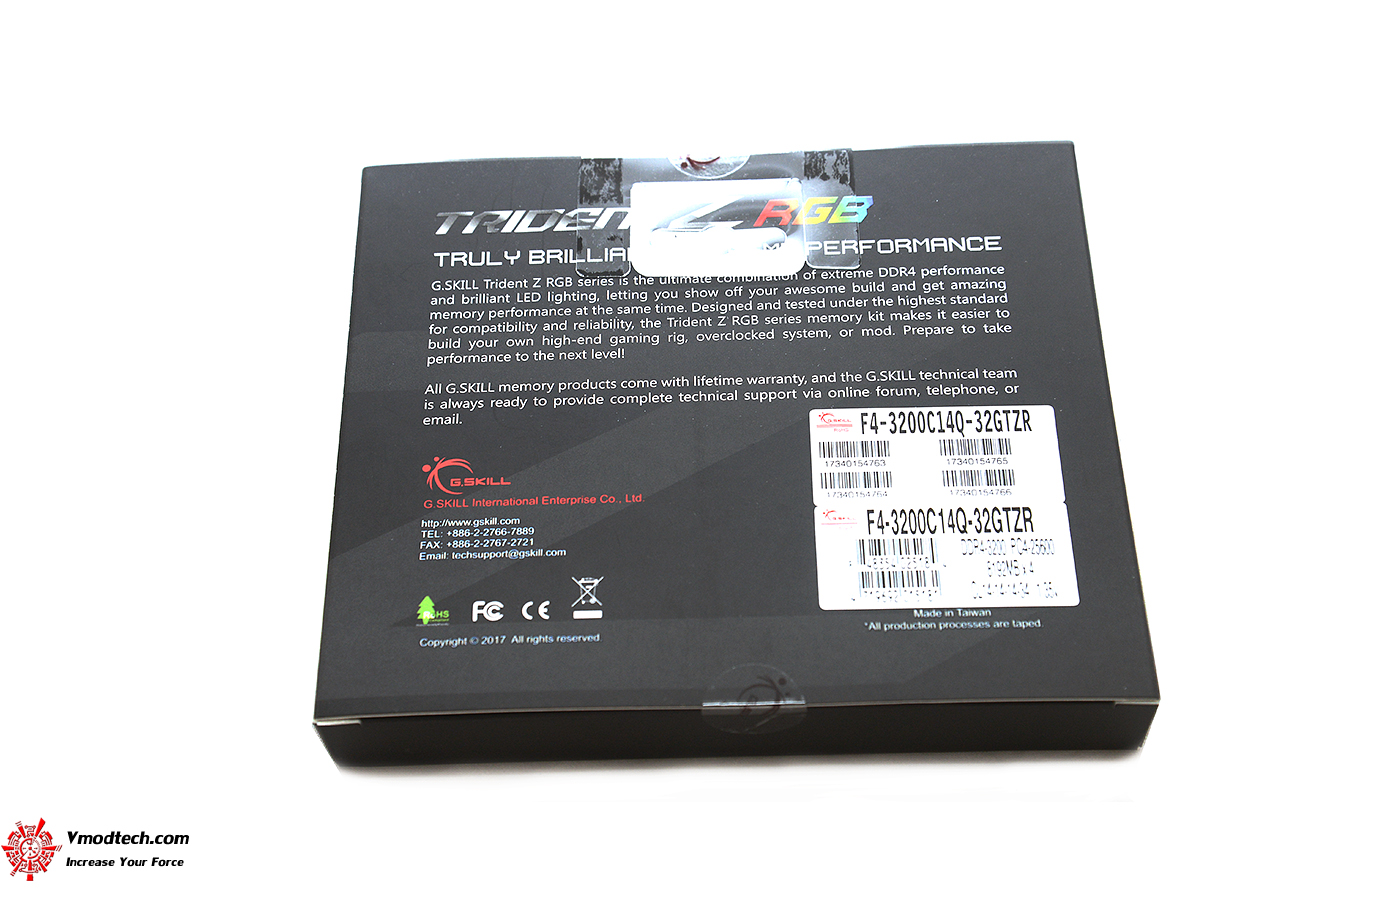 dsc 2899 G.SKILL Trident Z RGB DDR4 3200MHz 32GB (8GBx4) Quad Channel Review